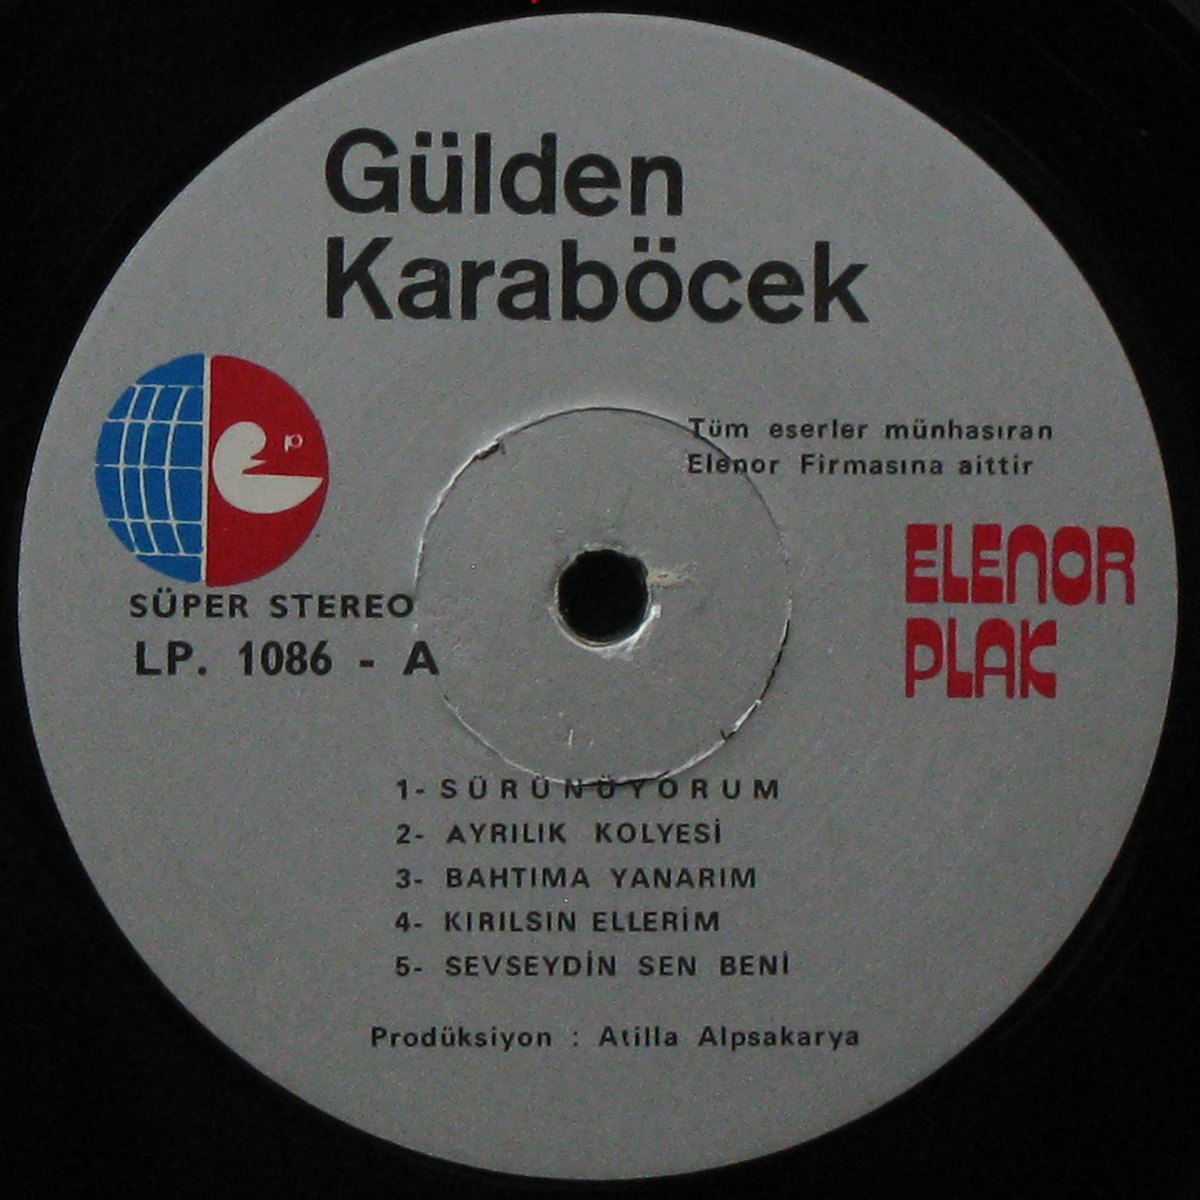 LP Gulden Karabocek — Muzik ve Ben фото 2